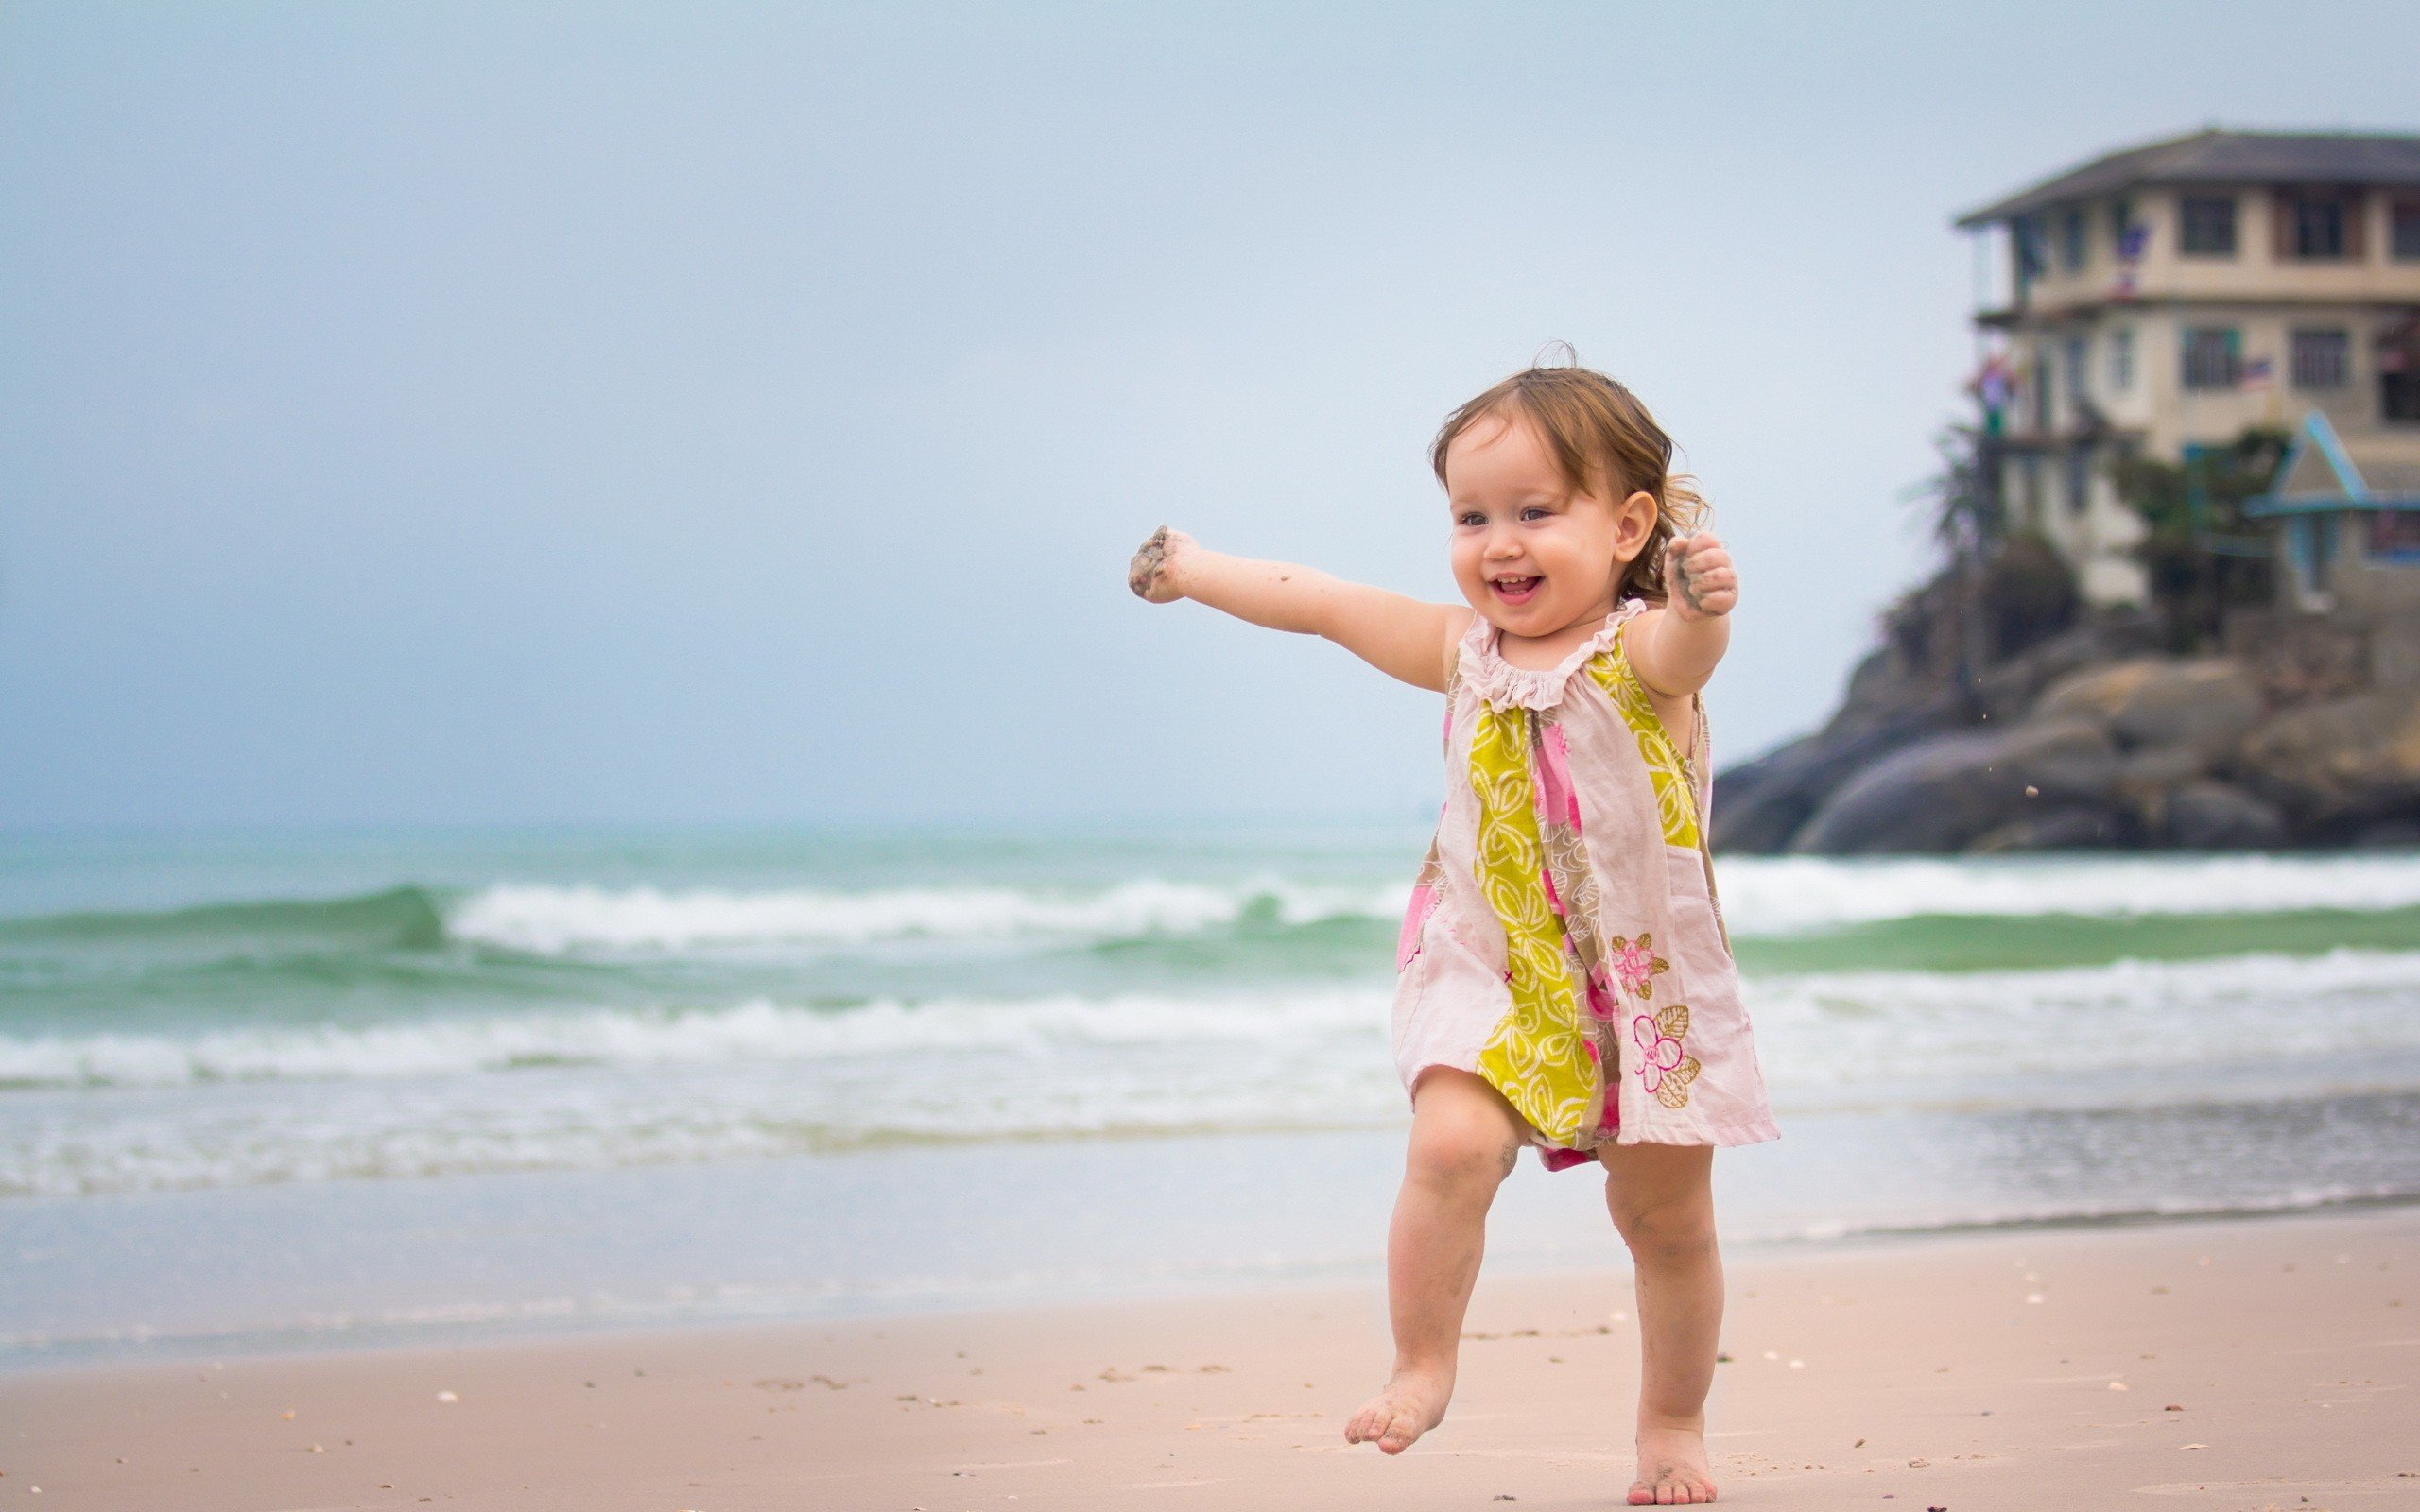 Smiling Happiness Running Children Sea Beaches Wallpaper Background